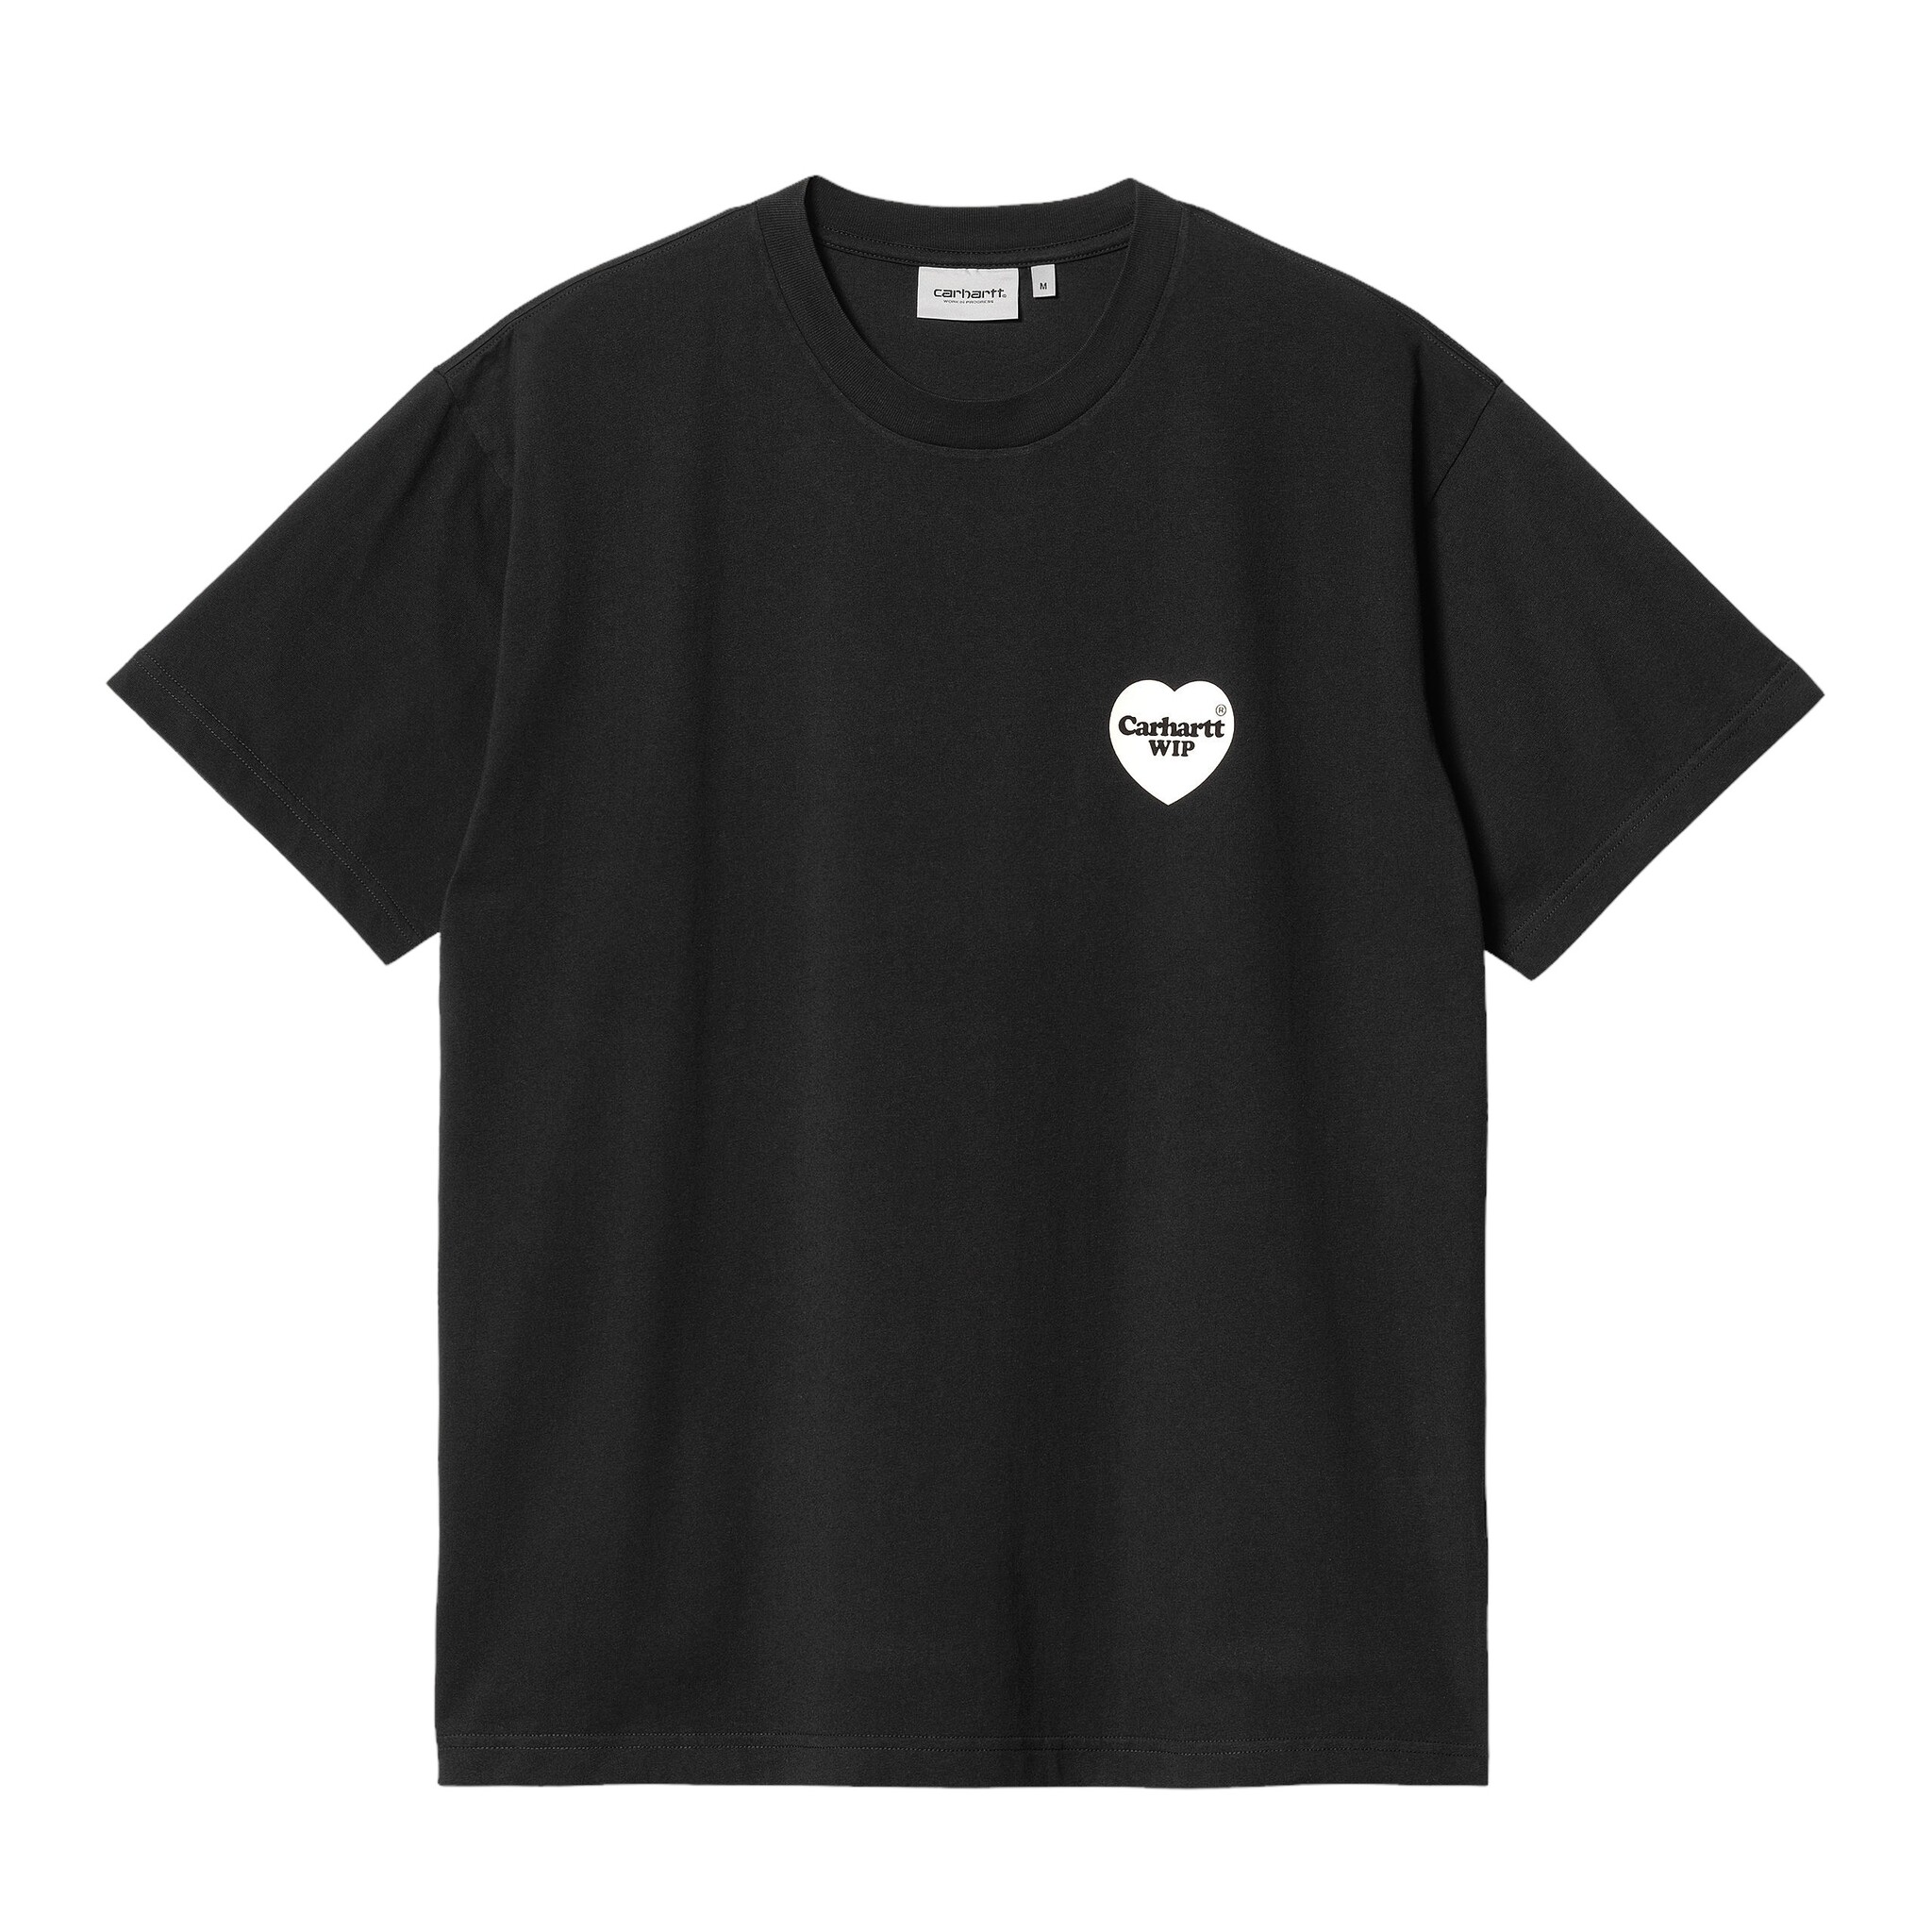 Carhartt WIP S/S Heart Bandana T-shirt - Black/White Stone Washed